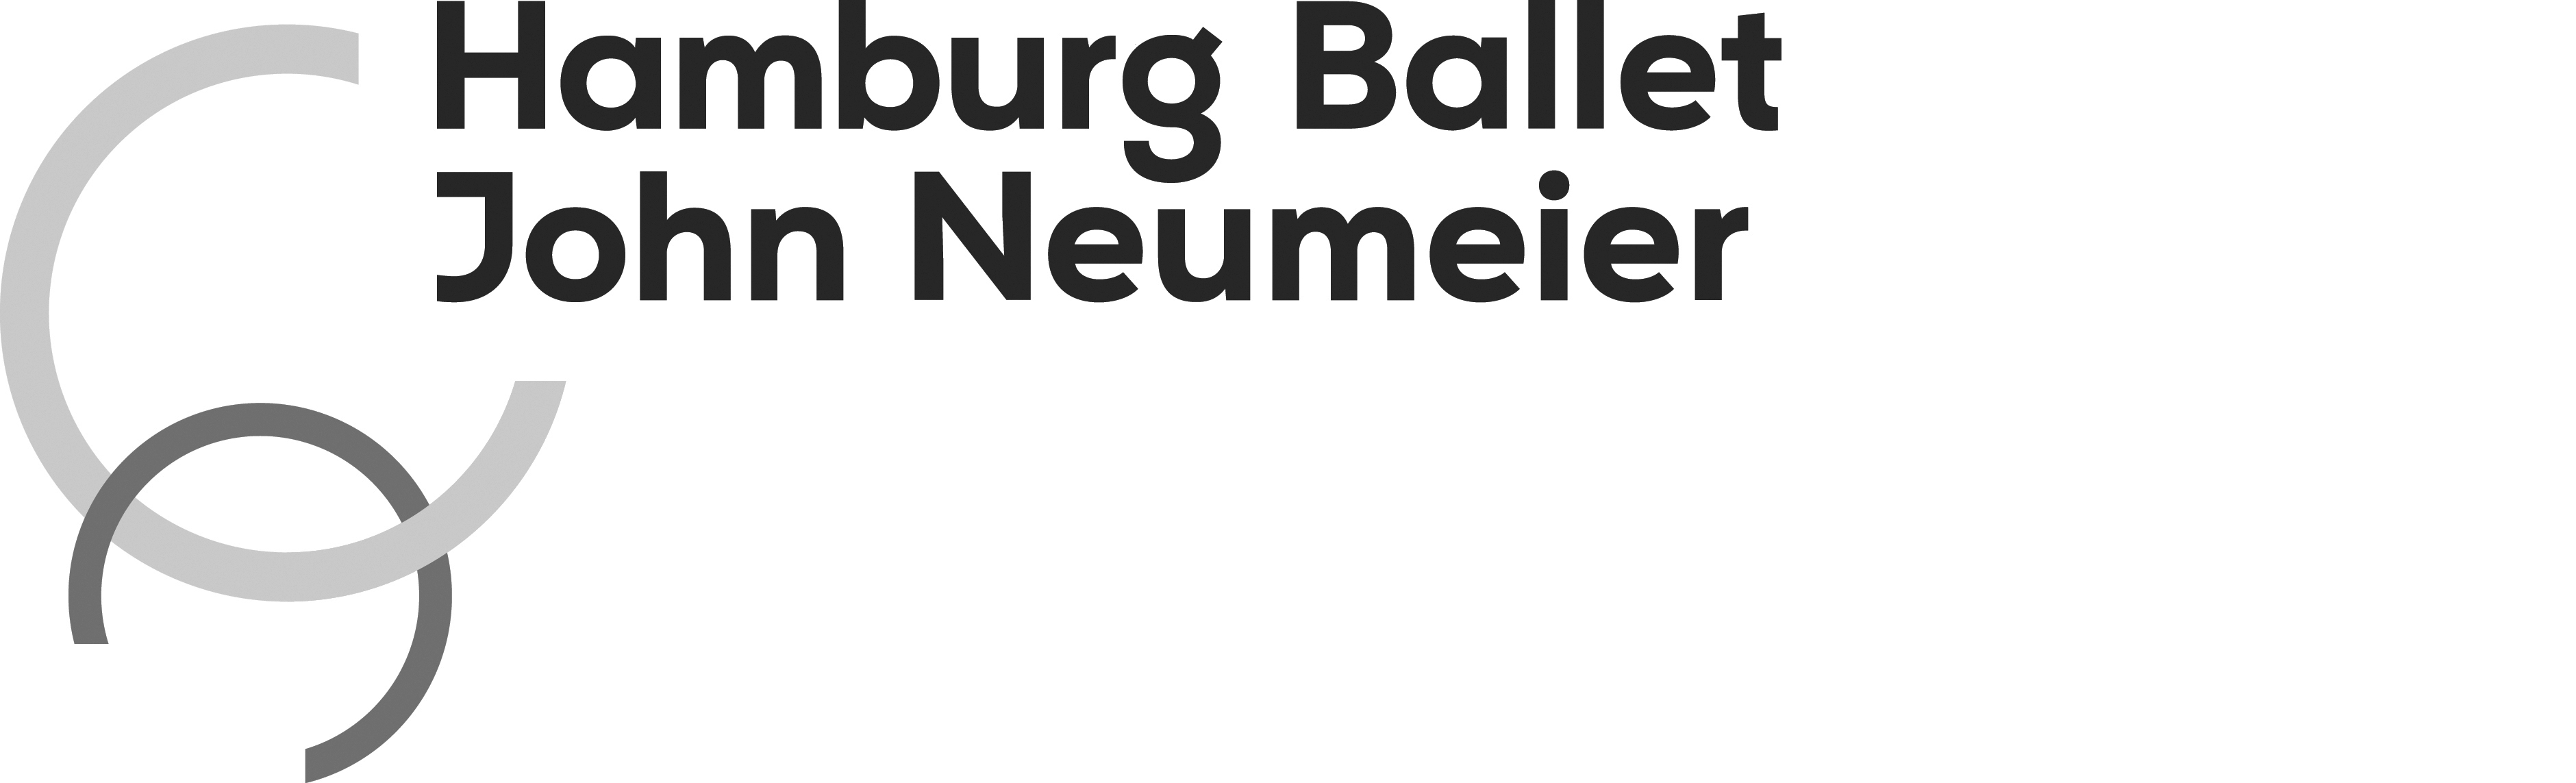 Hamburg Ballet